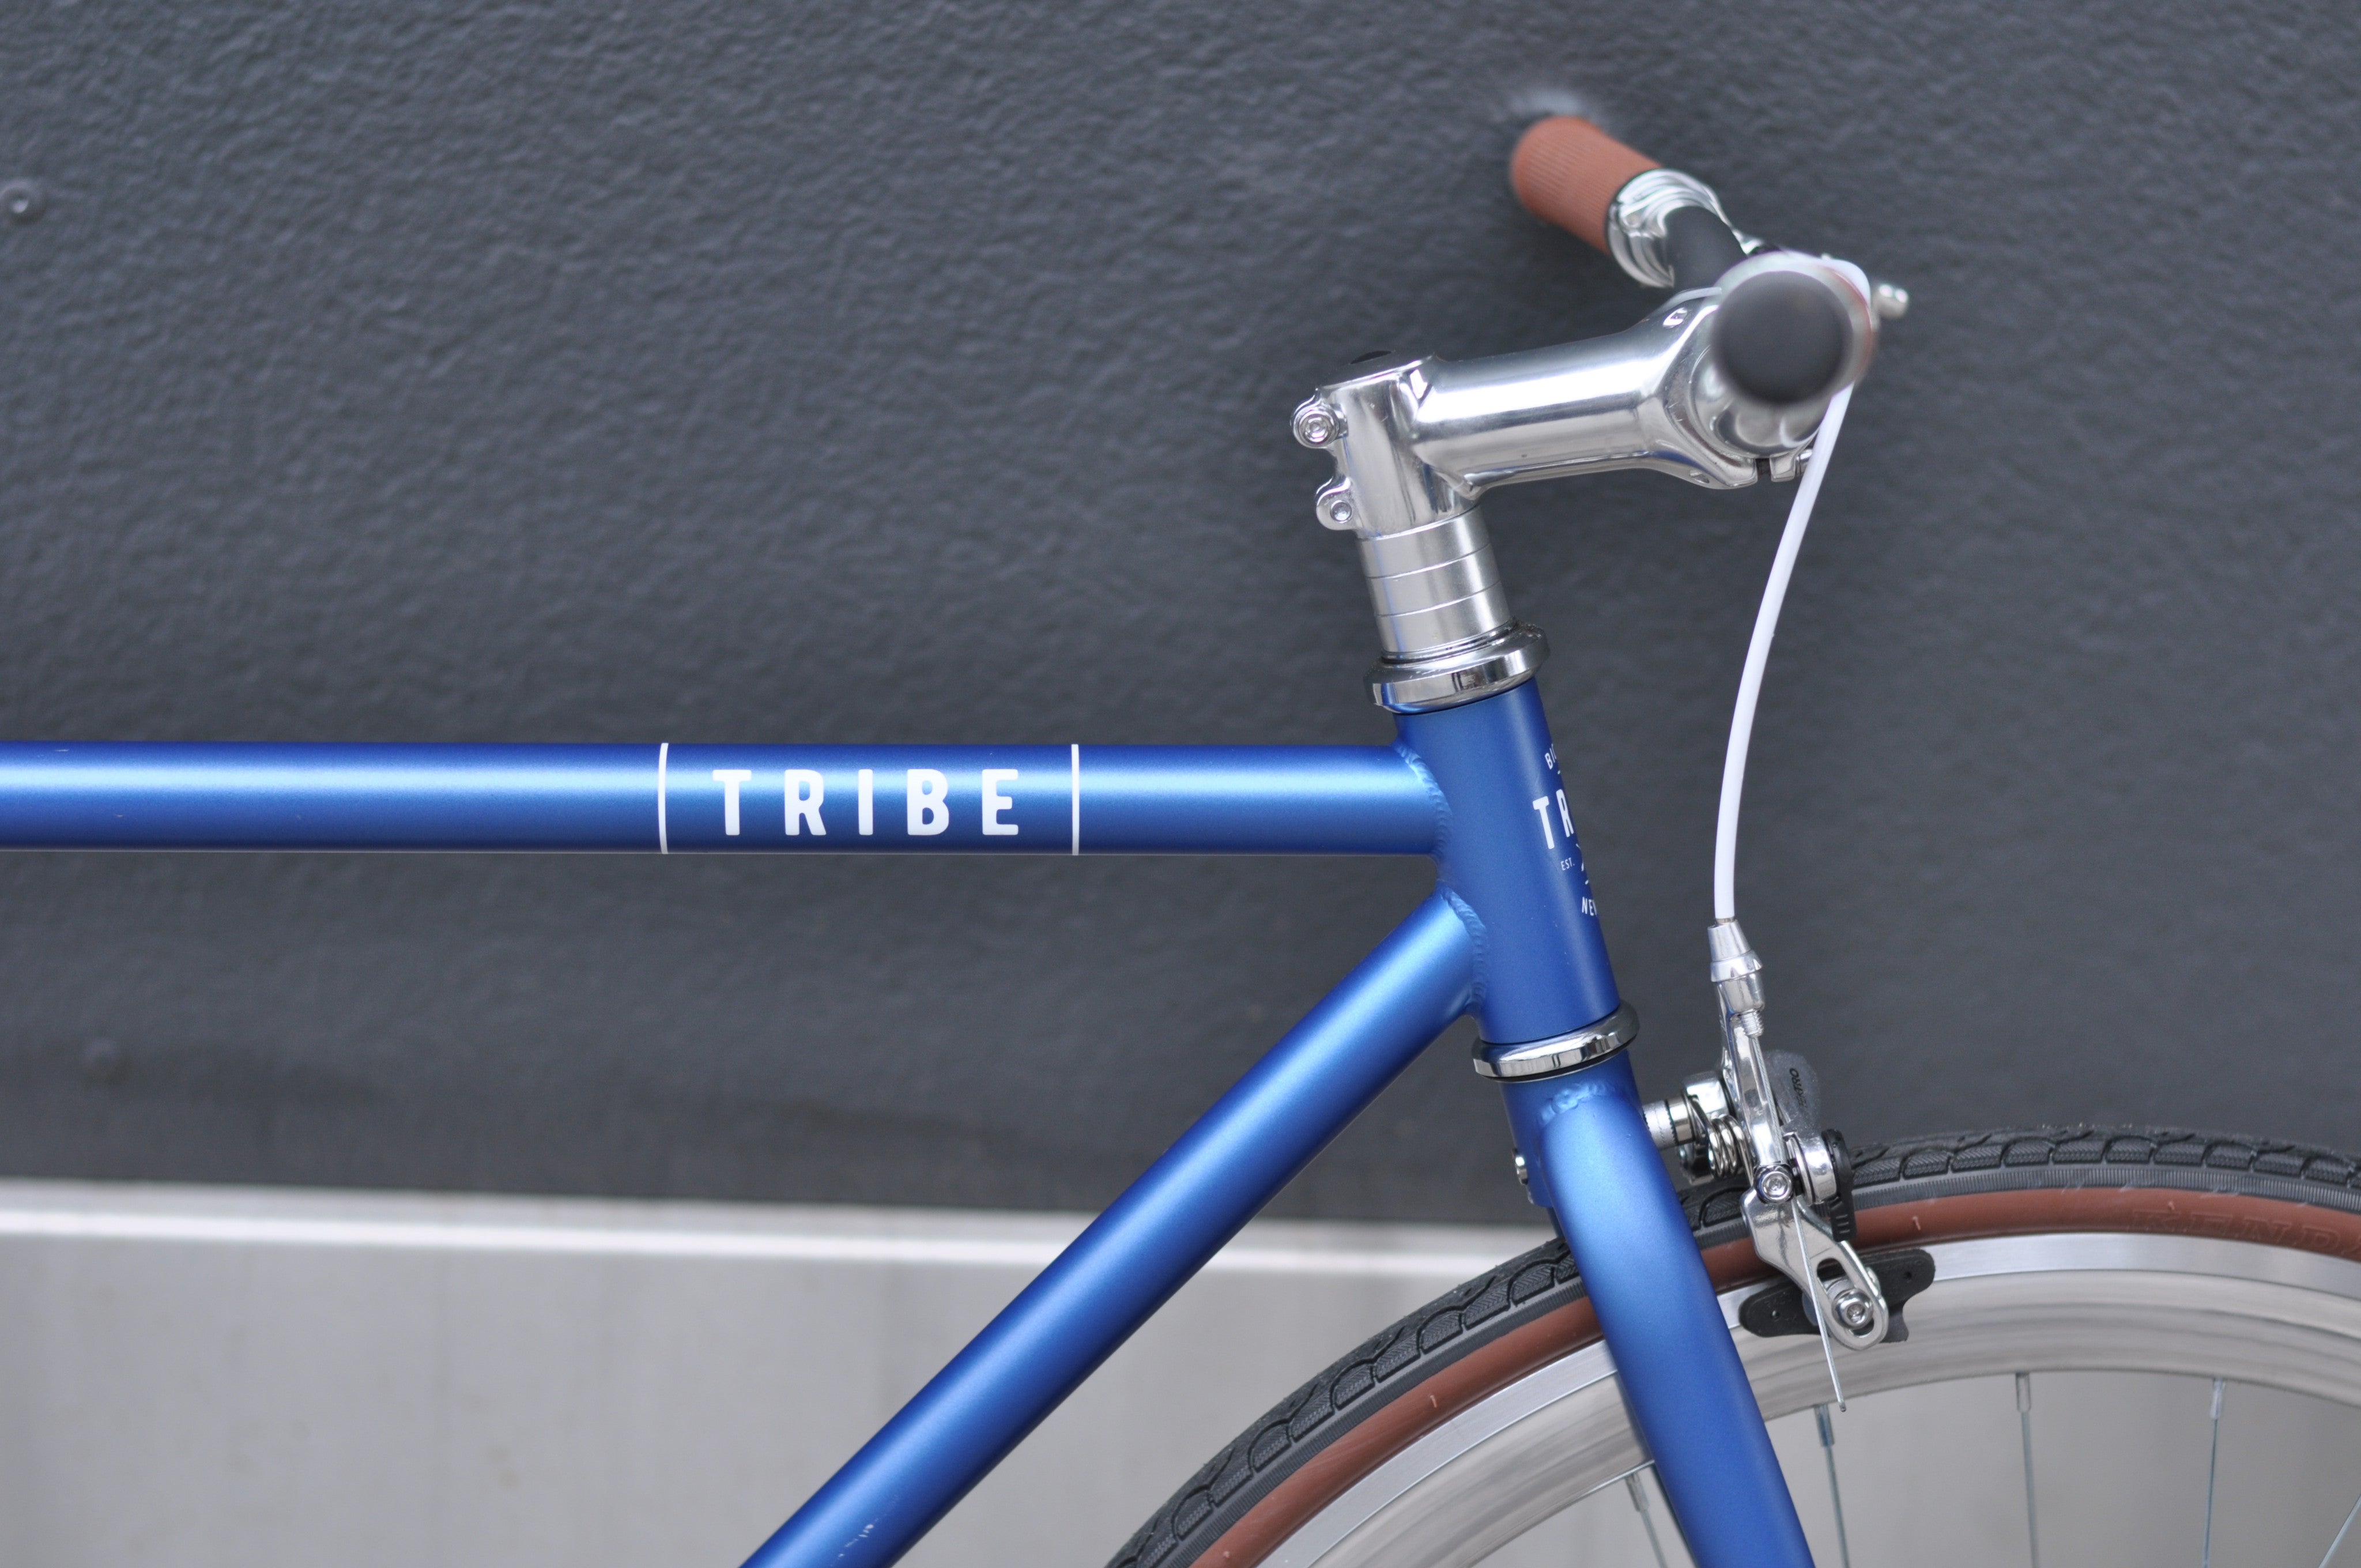 tribe single speed bike